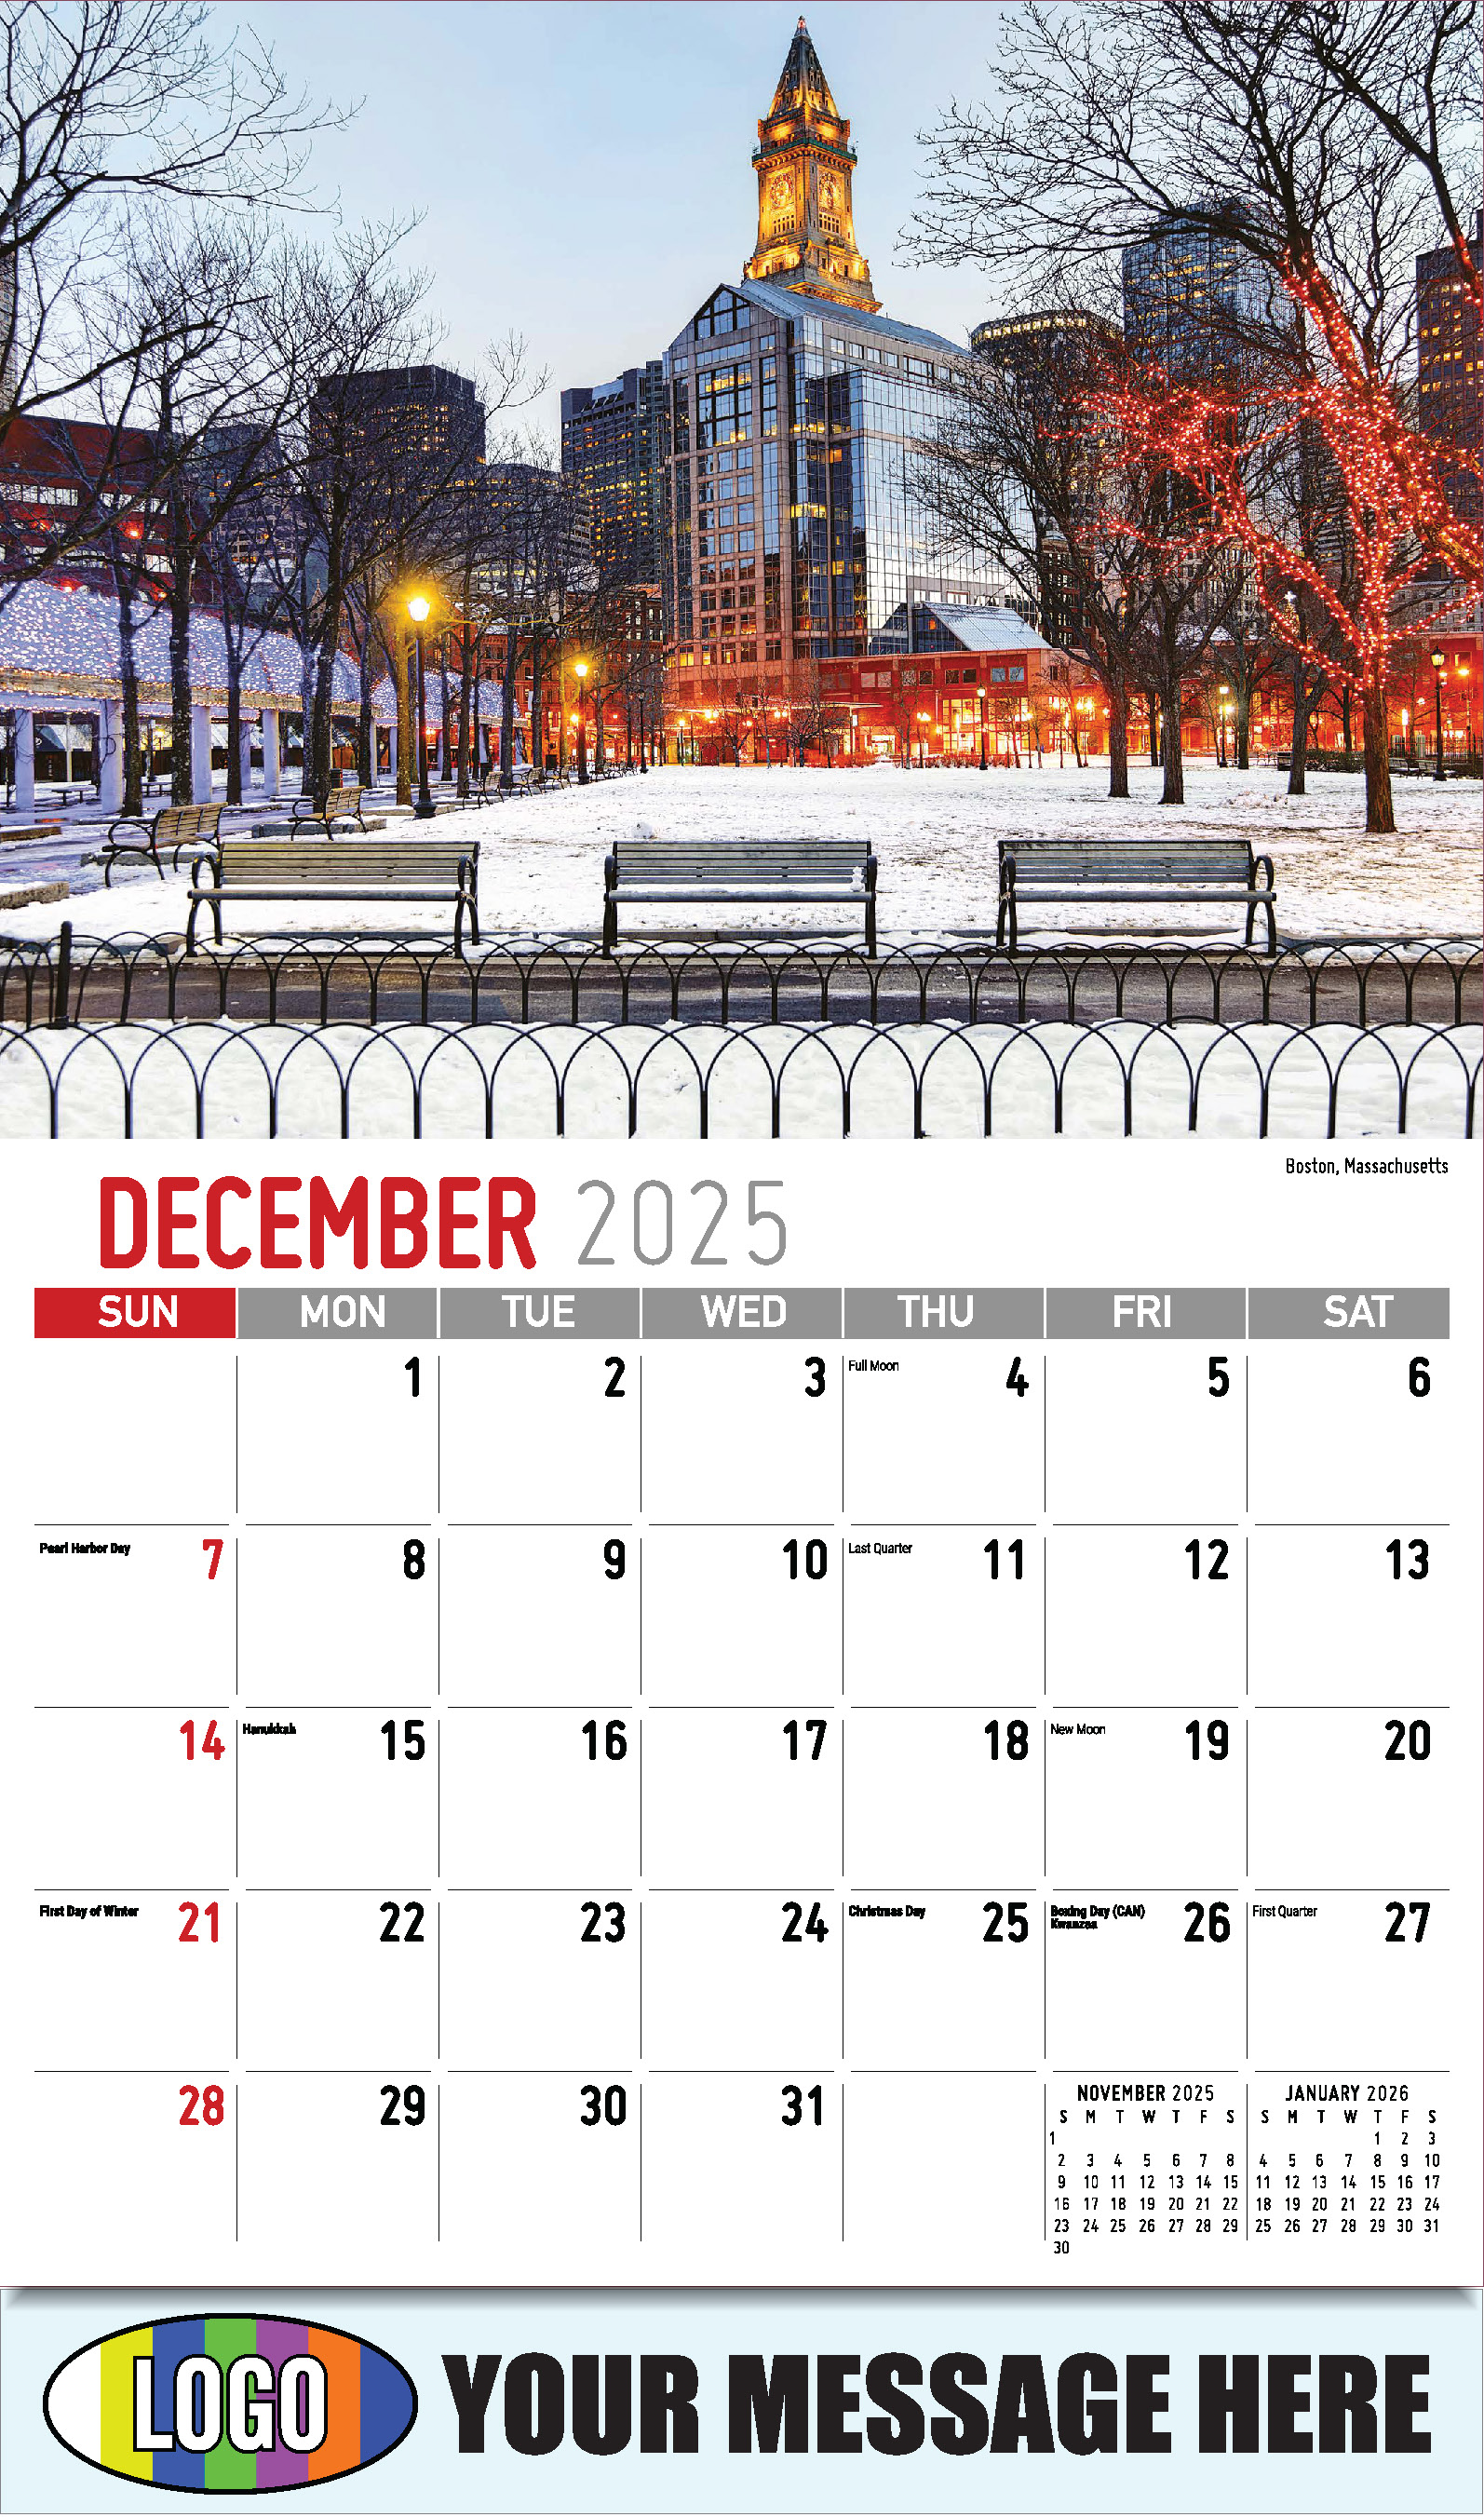 Scenes of New England 2025 Business Advertising Wall Calendar - December